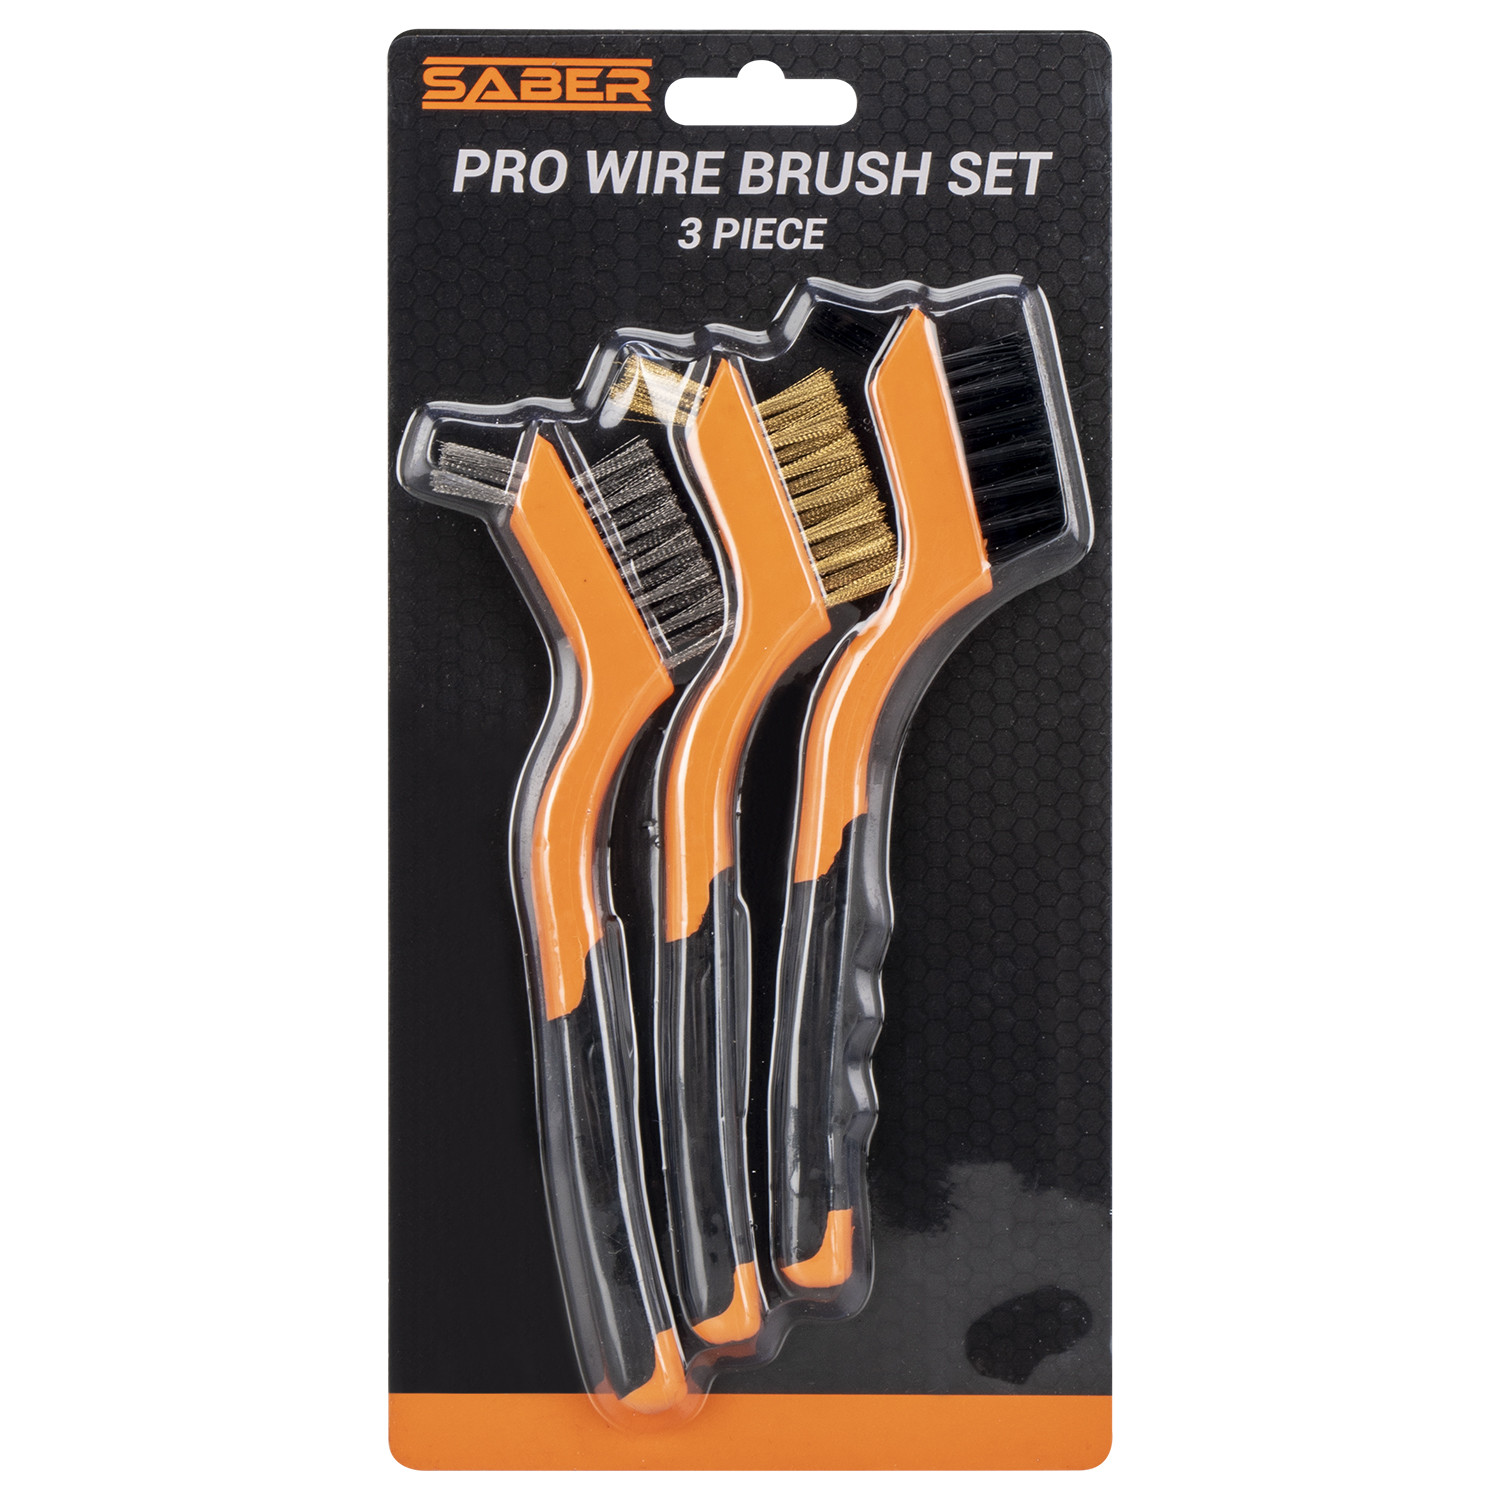 Saber 3 Piece Pro Wire Brush Set Image